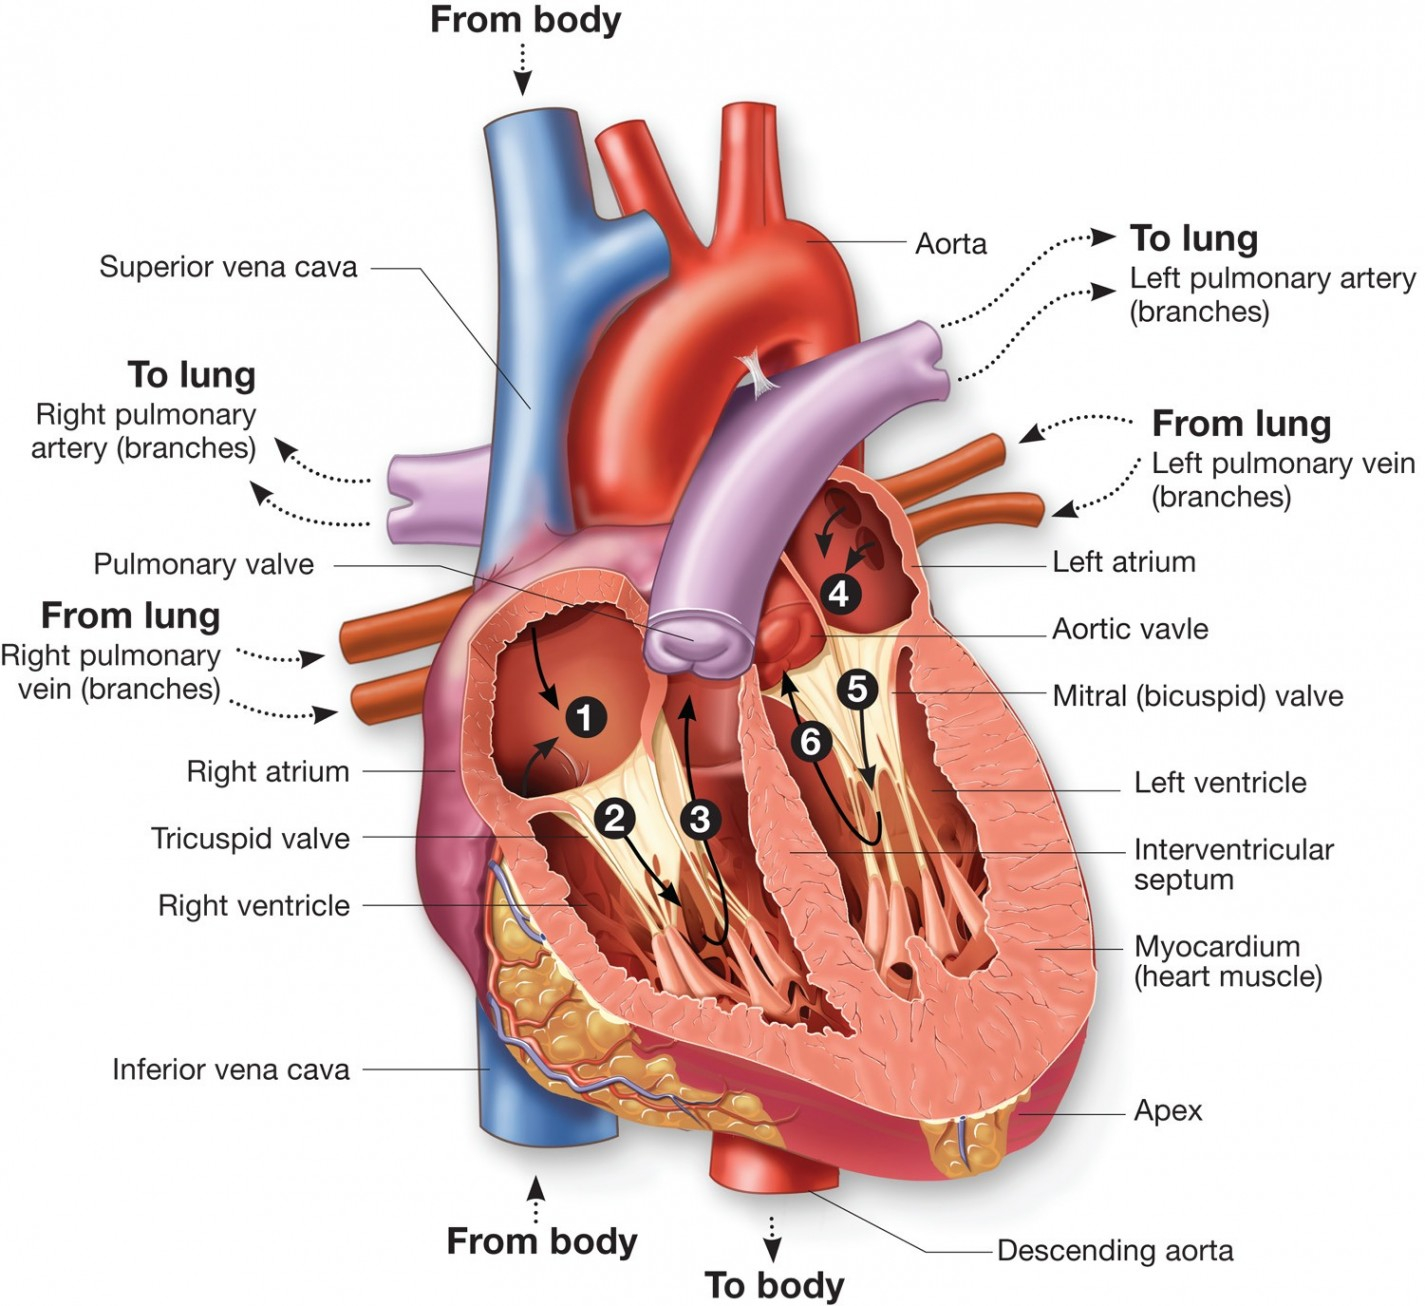 Blood Flow Through The Heart Diagram Blood Flow Diagram Of Heart New Heart Diagram With Labels